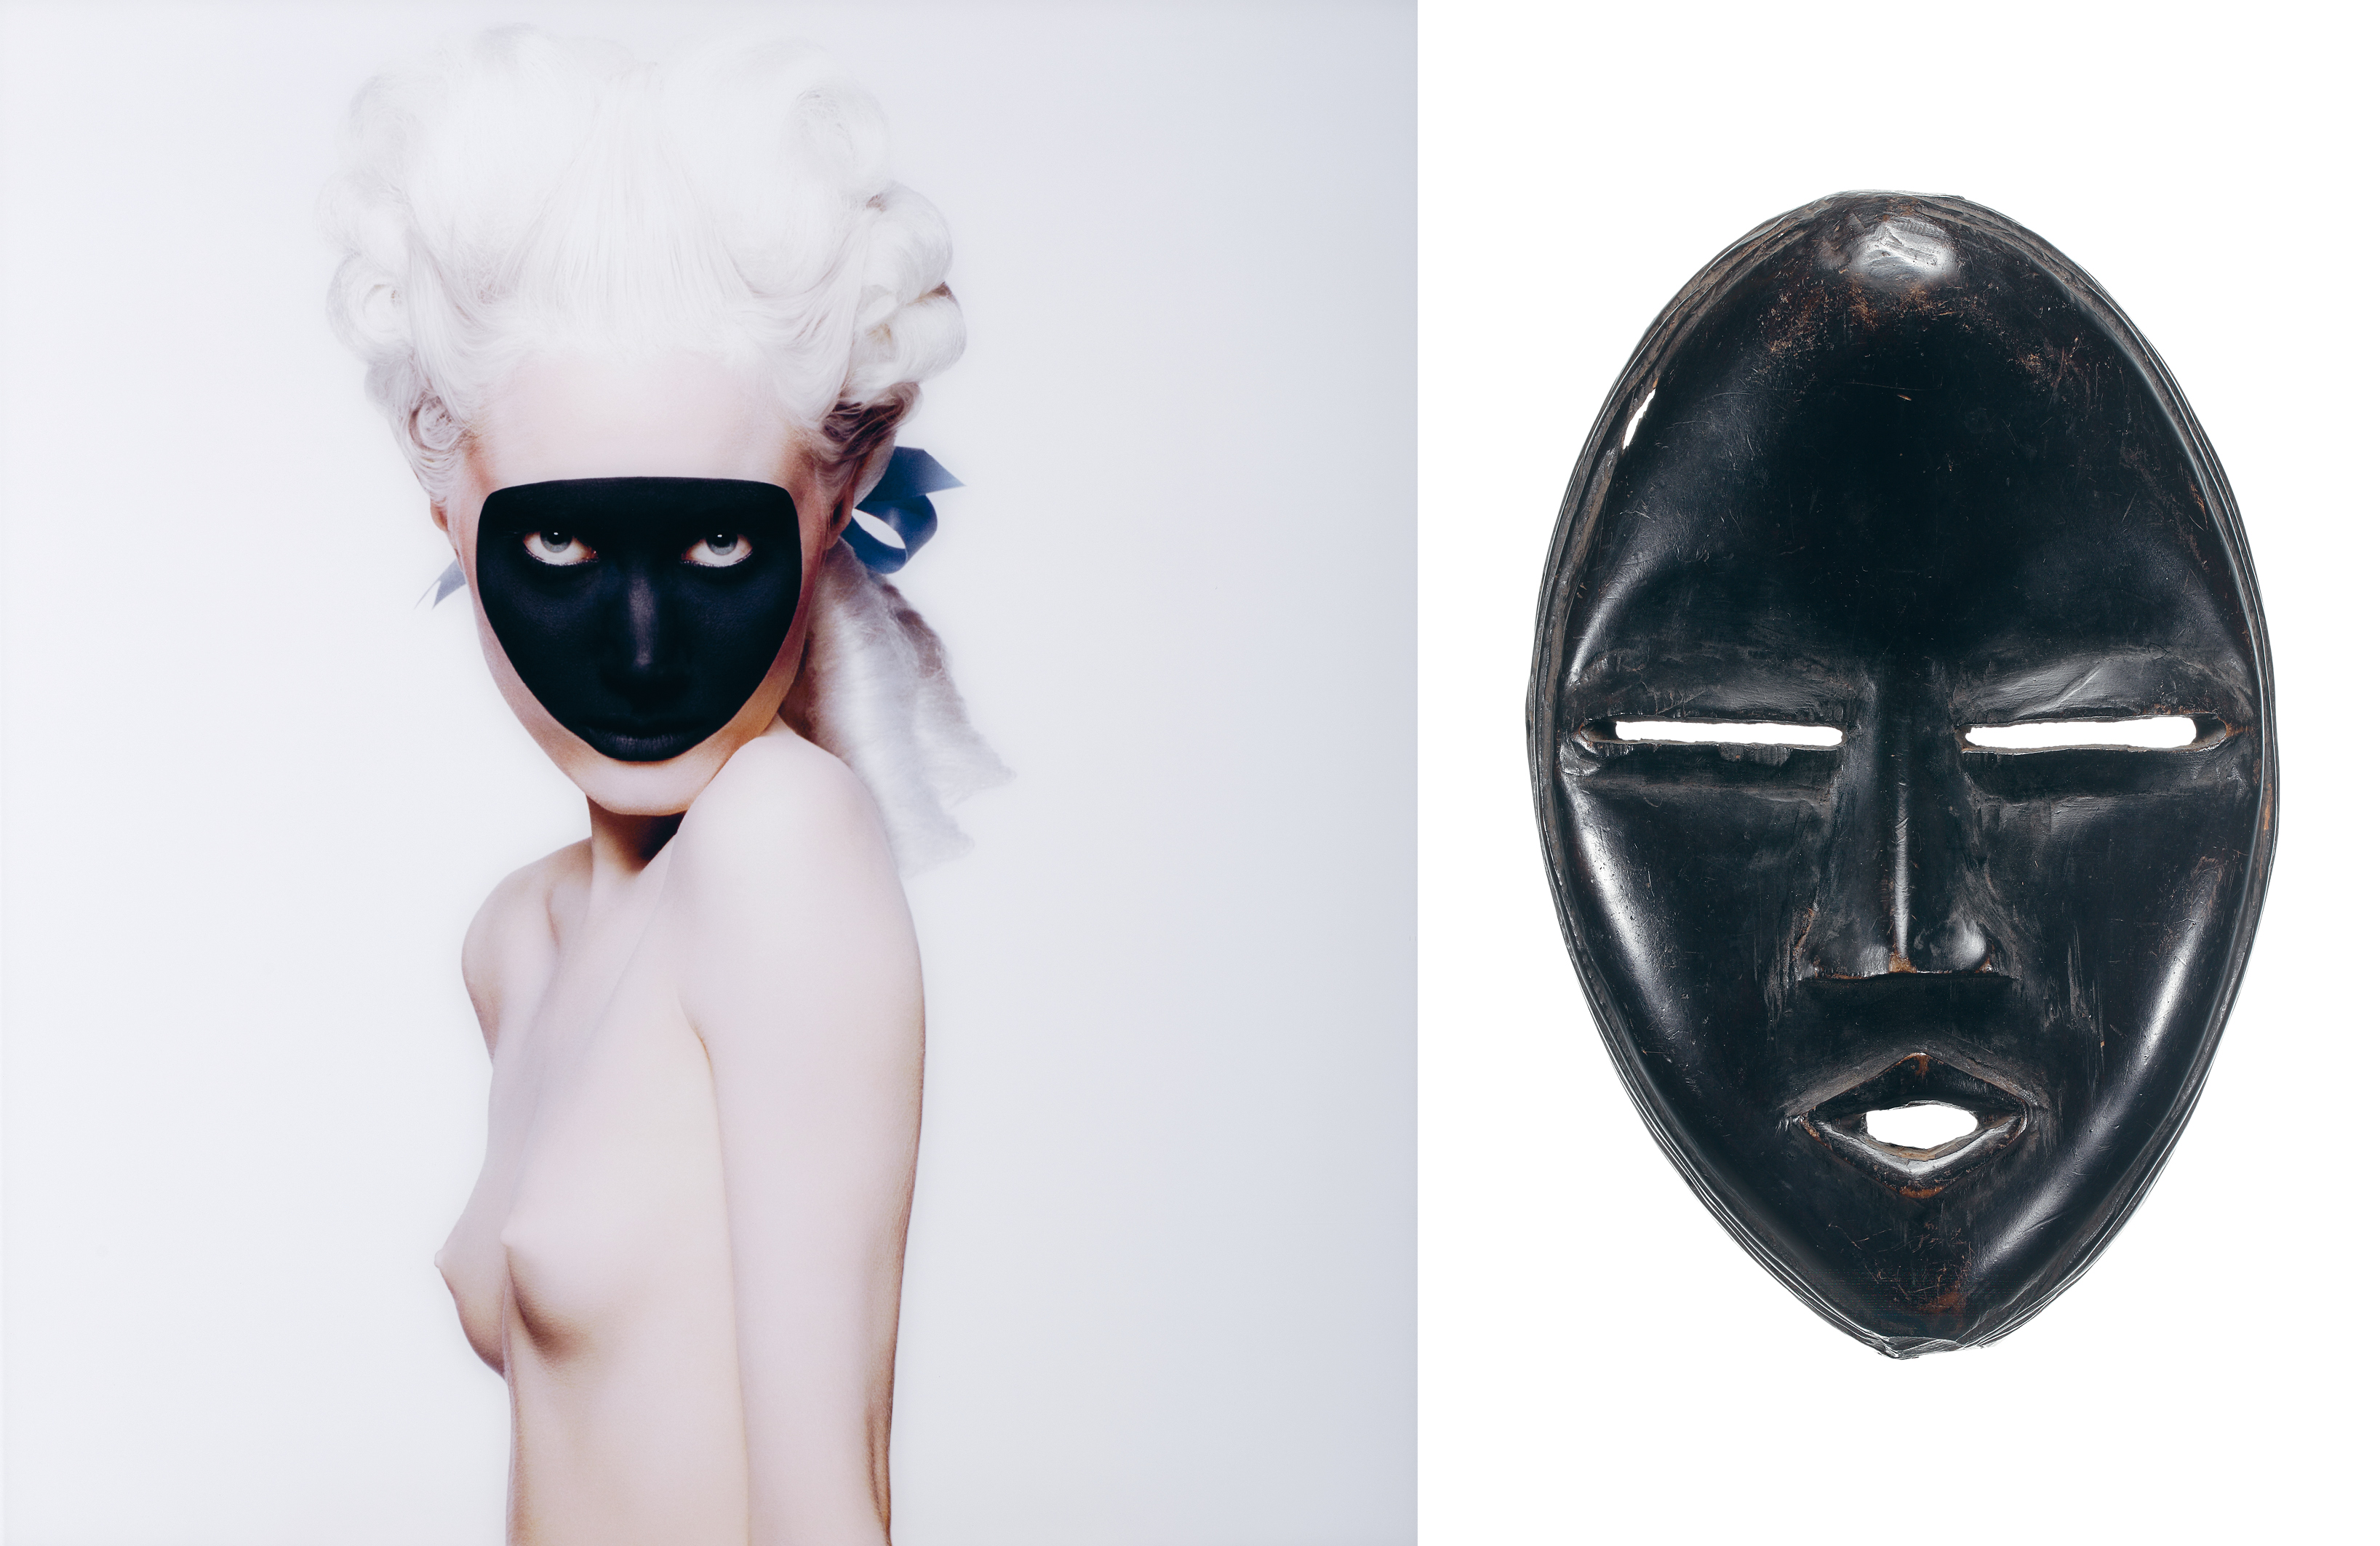 Hot List: POWERMASK: The POWER of Masks by Belgian fashion designer Walter  Van Beirendonck – Novella